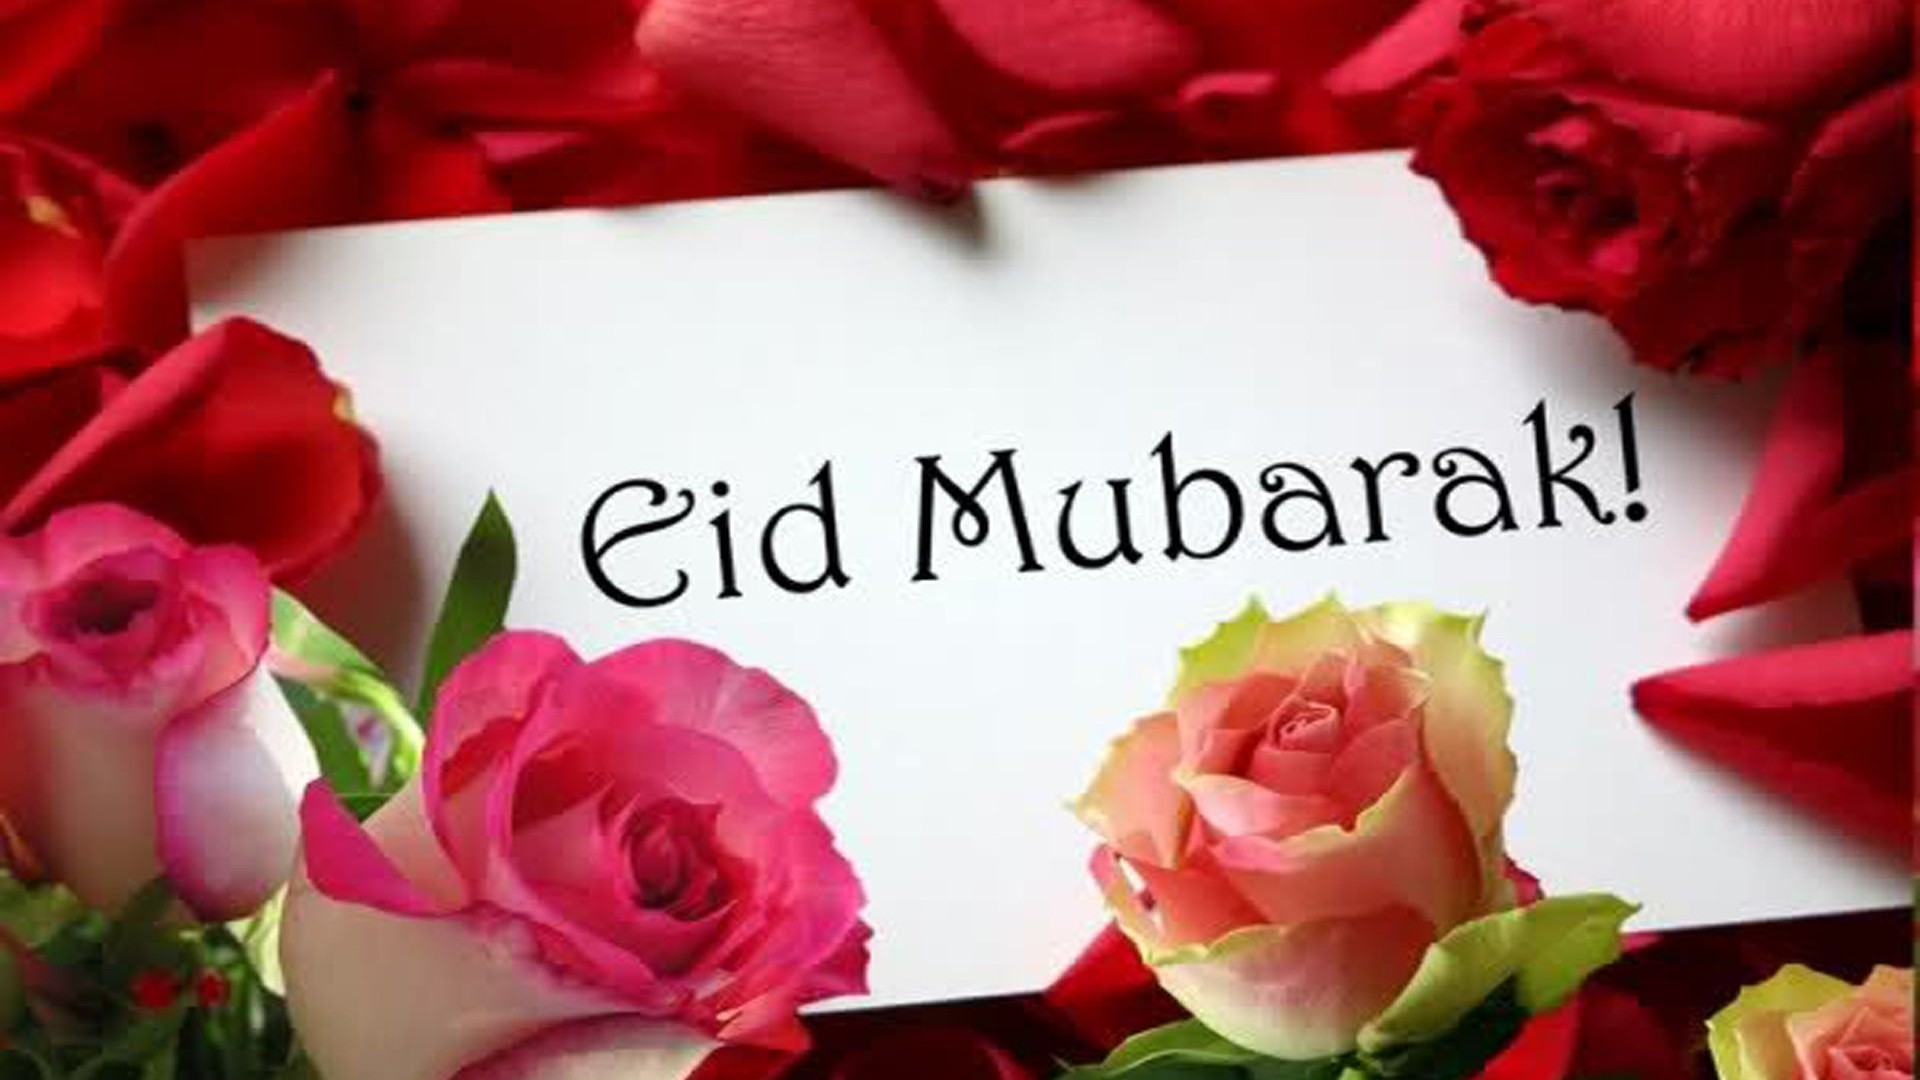 hd eid mubarak wishes download mobile free wallpaper